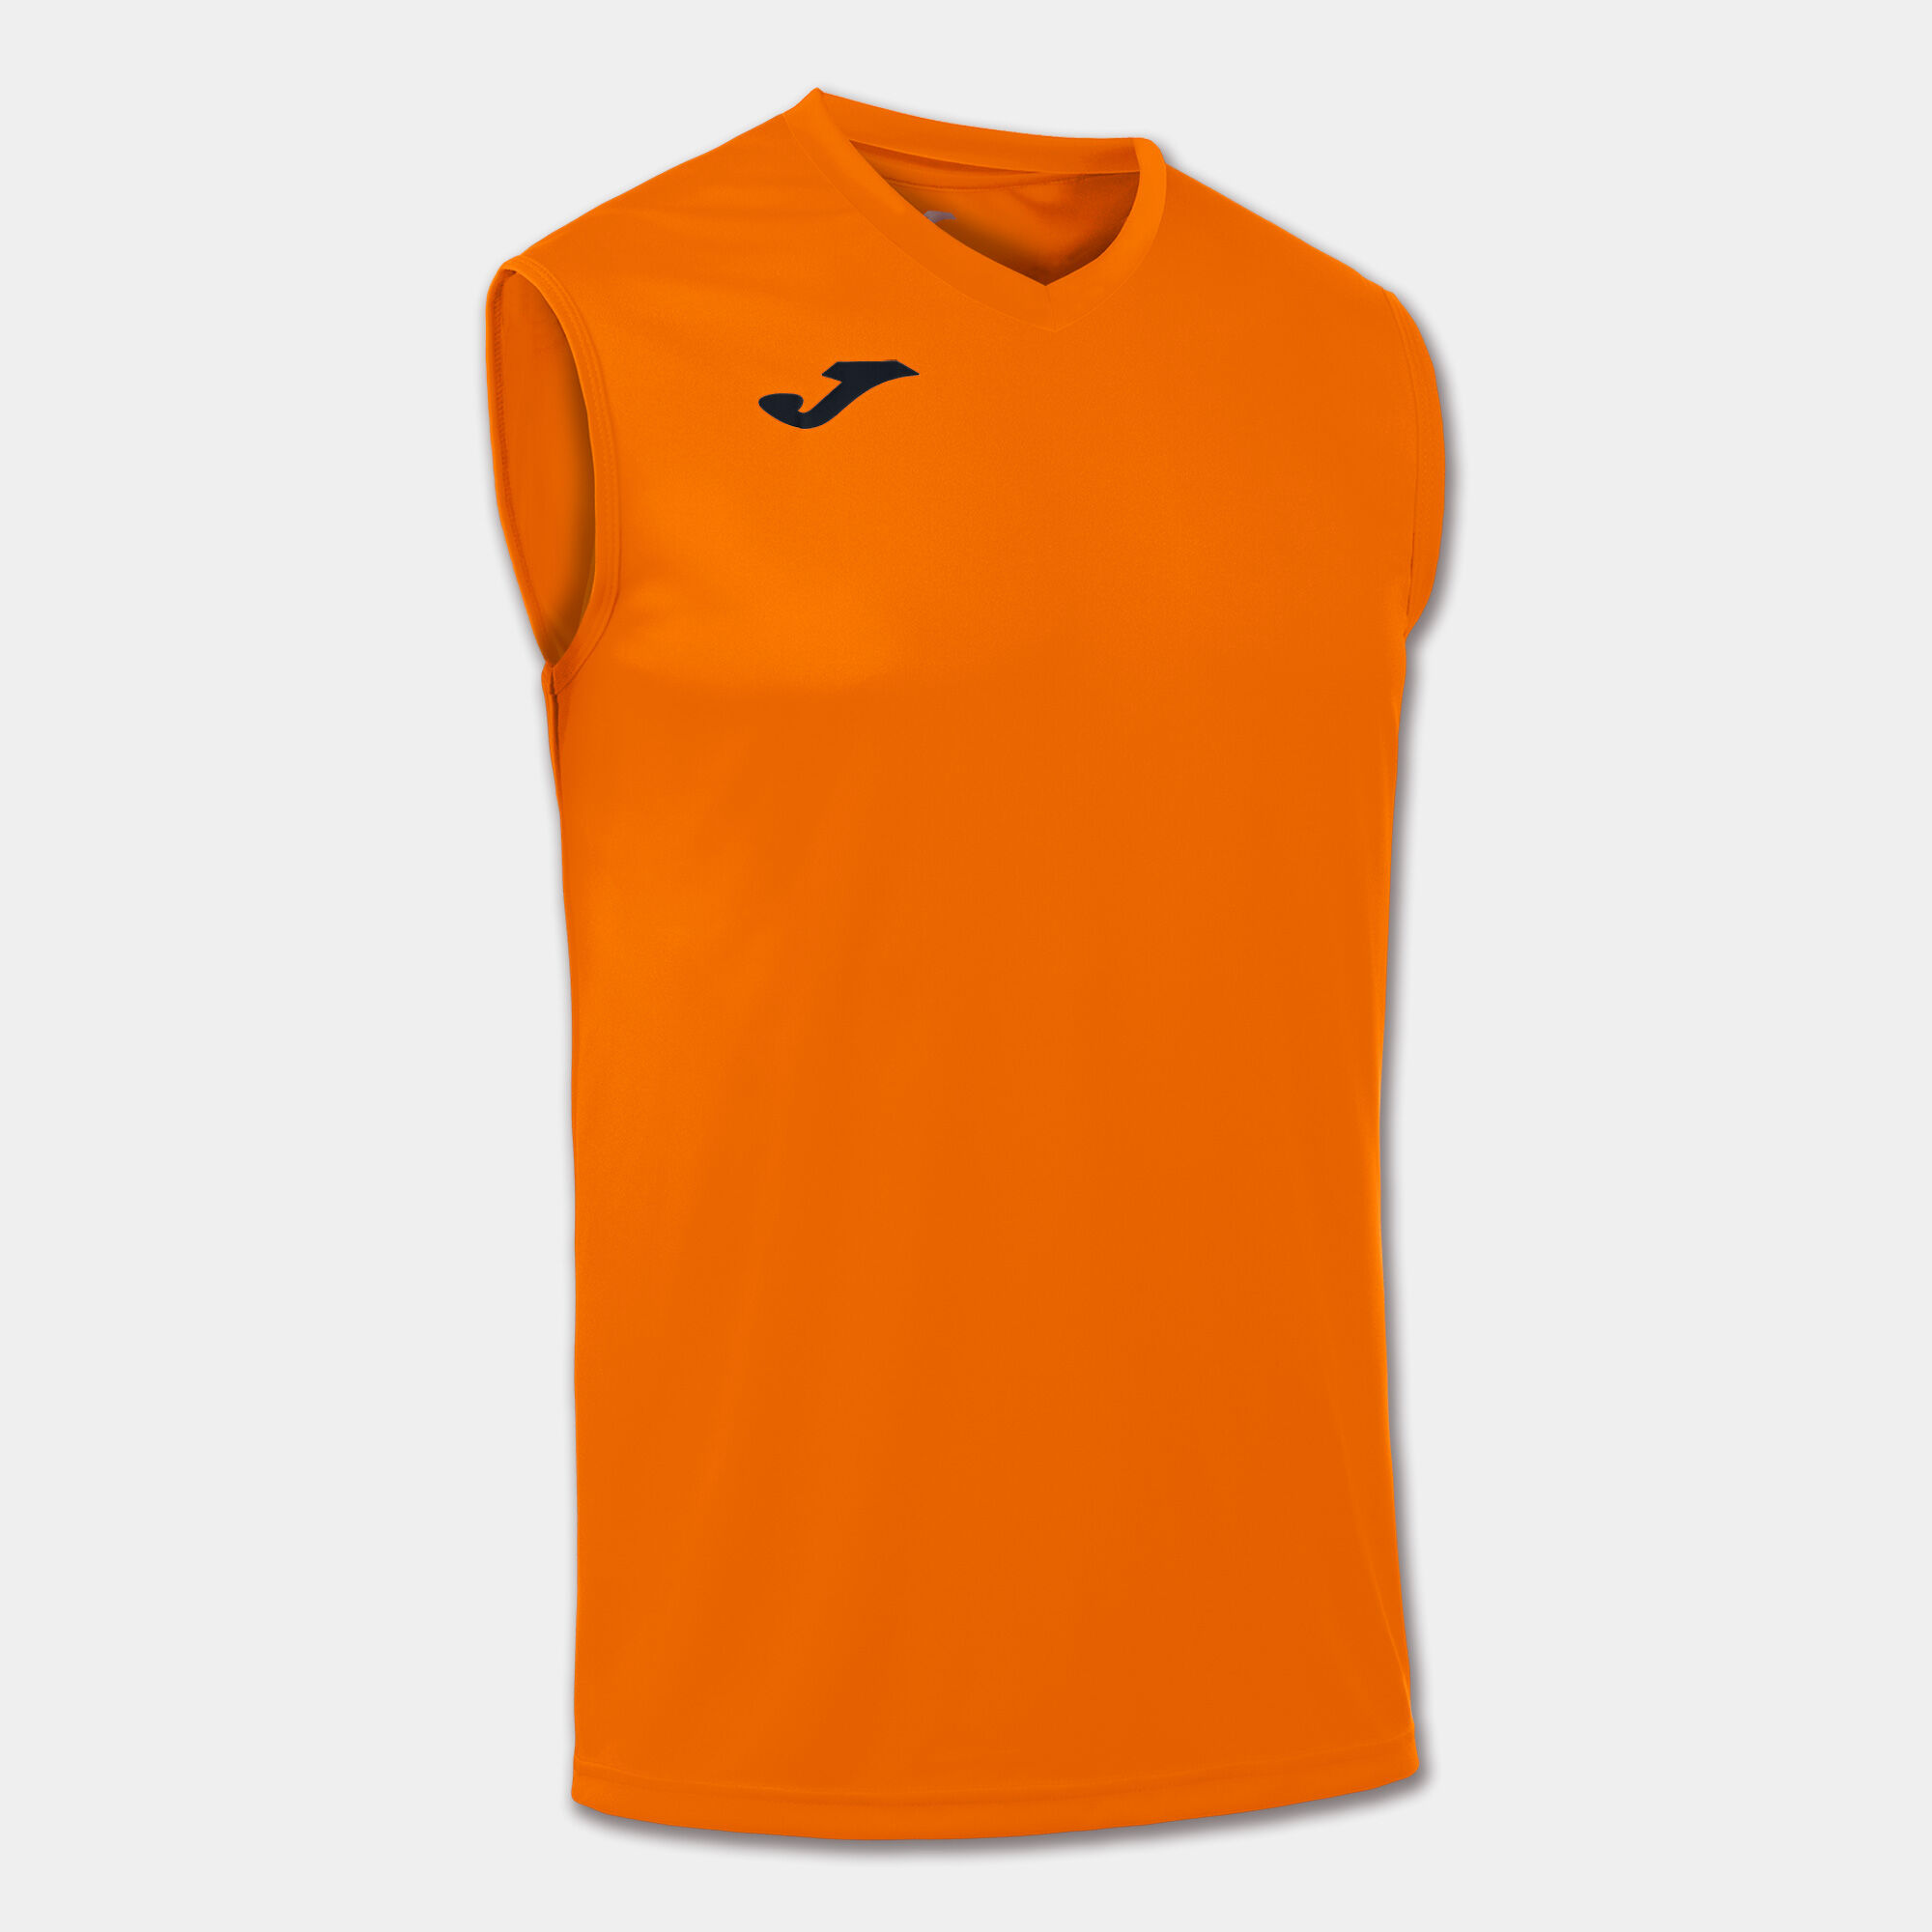 Shirt s/m mann Combi orange